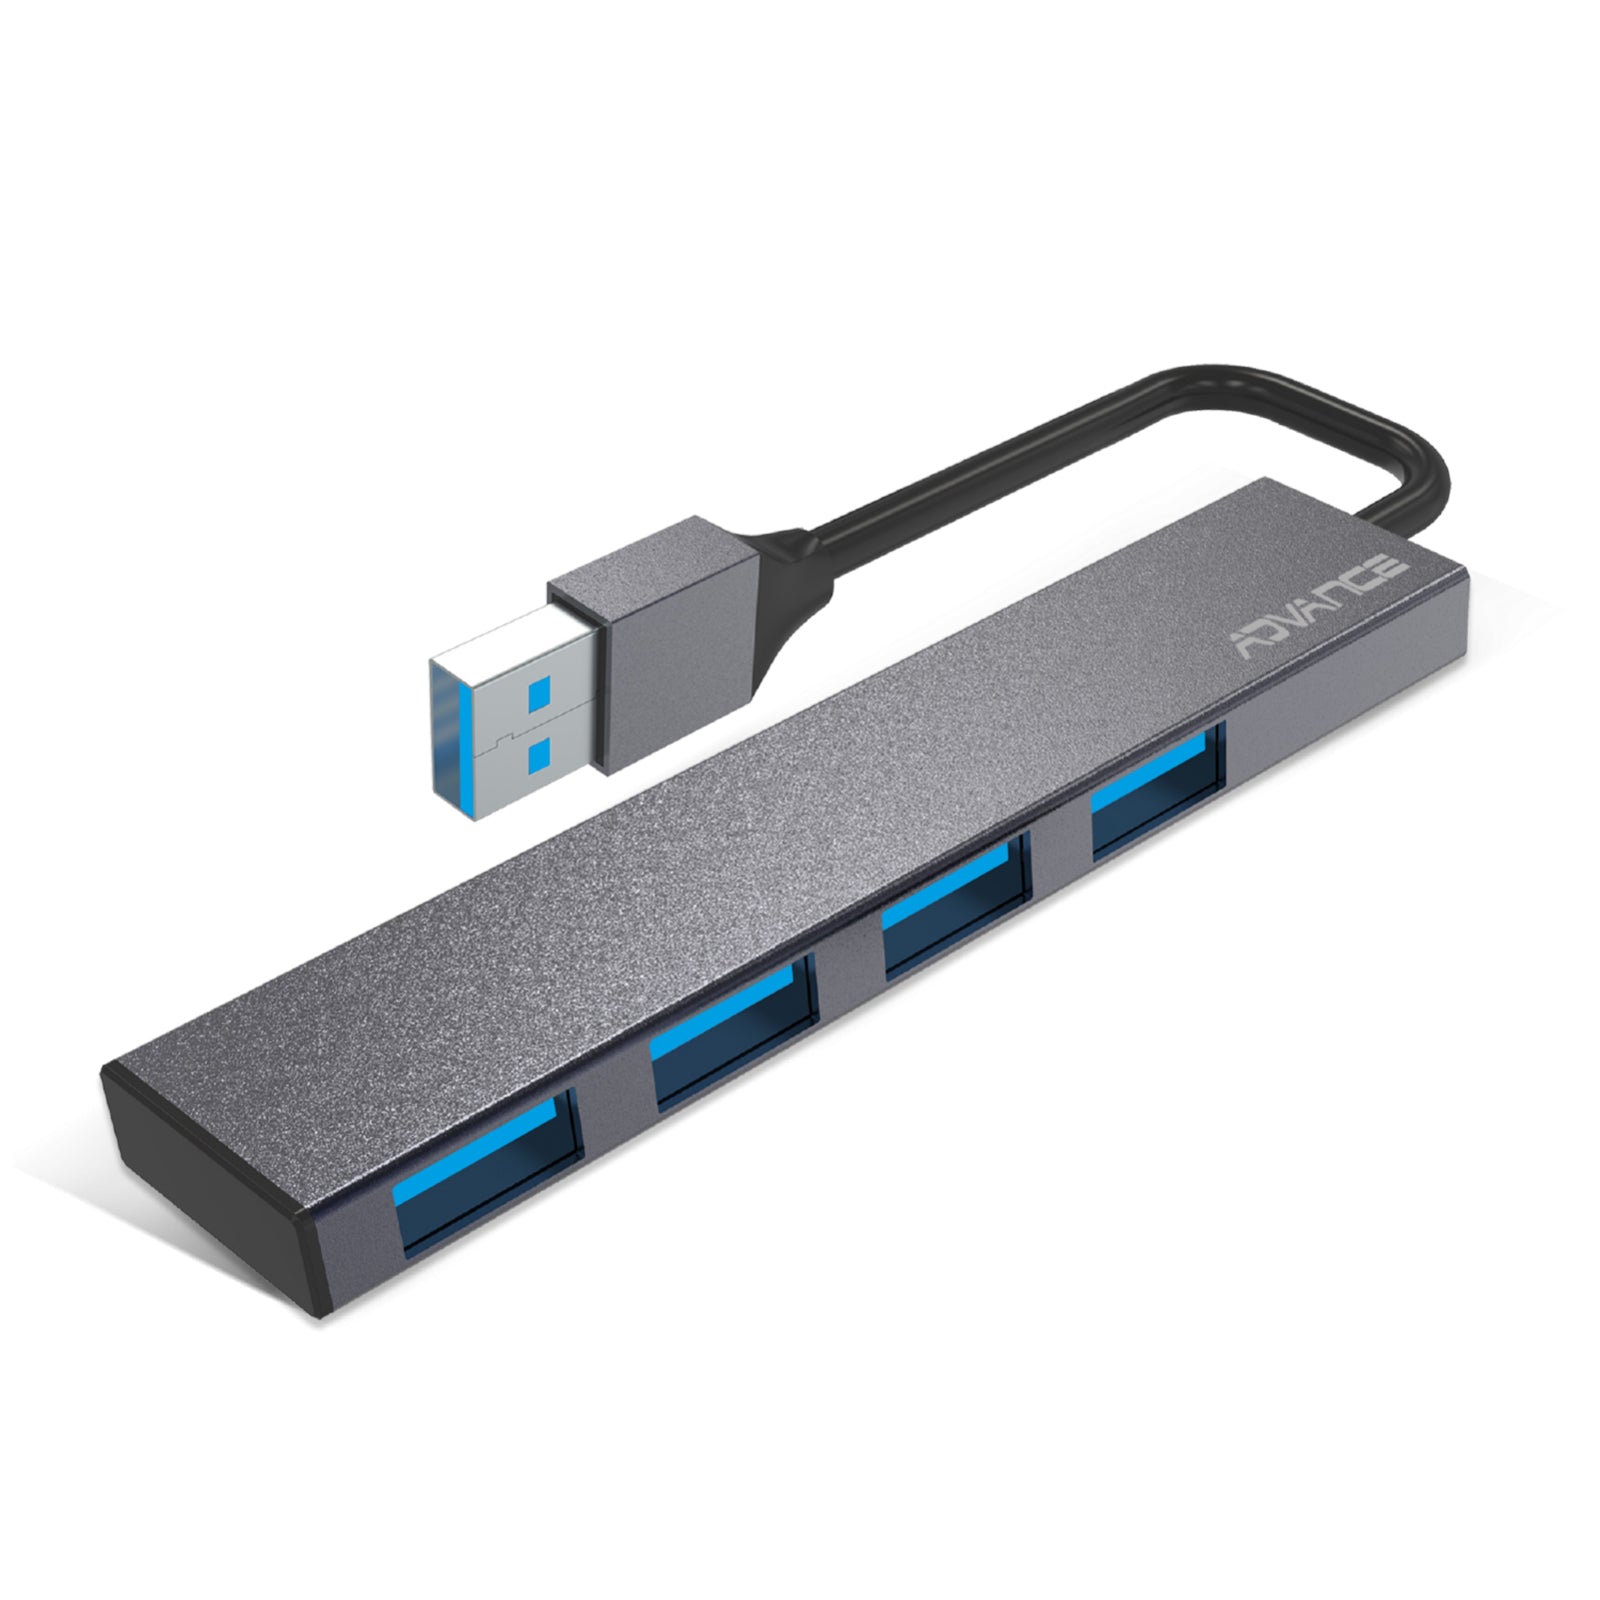 Advance - Hub USB - XPAND SMART USB 3.0